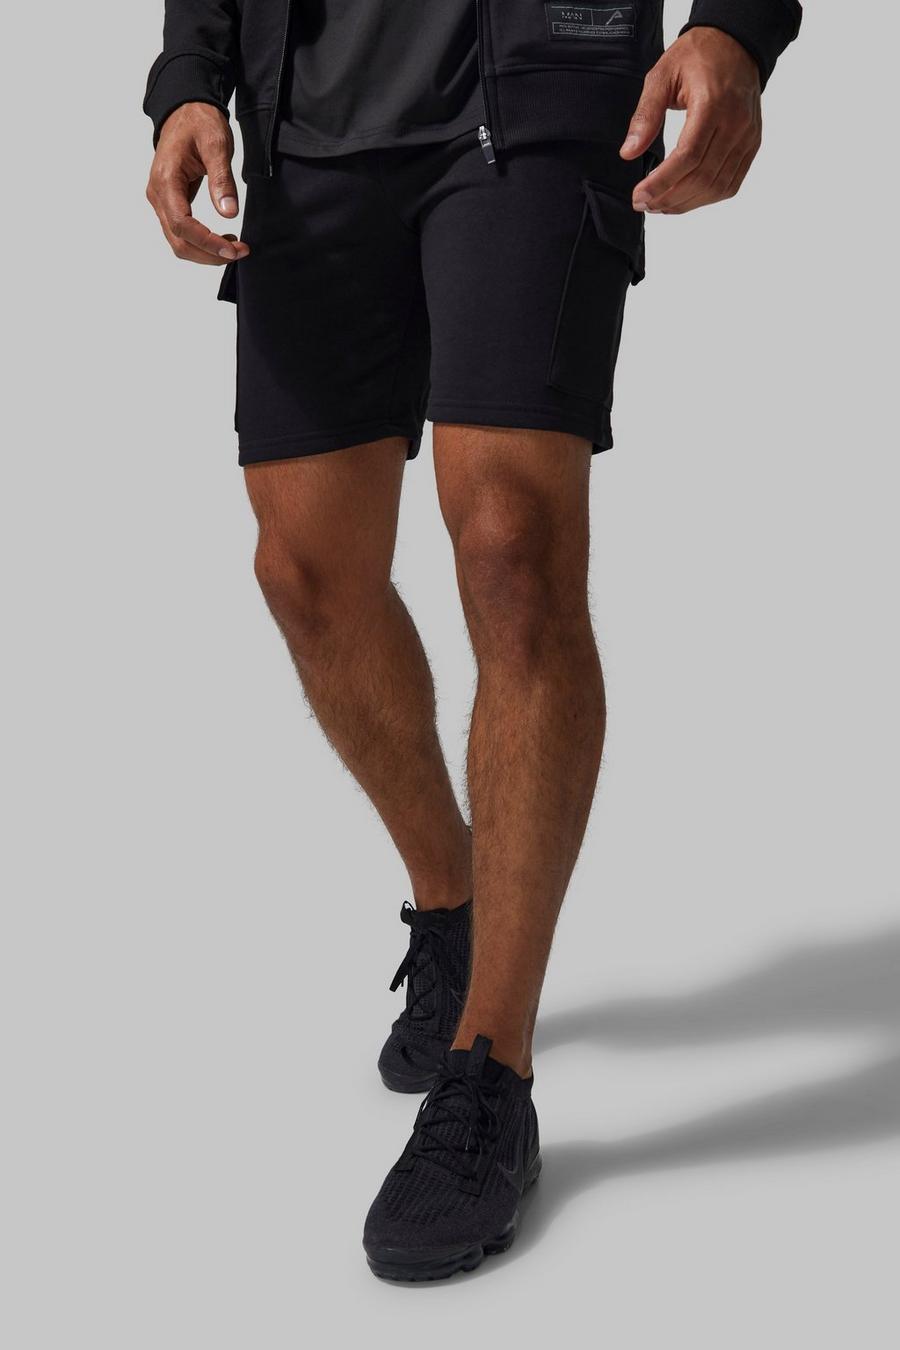 Pantaloncini Cargo Man Active da 12 cm, Black